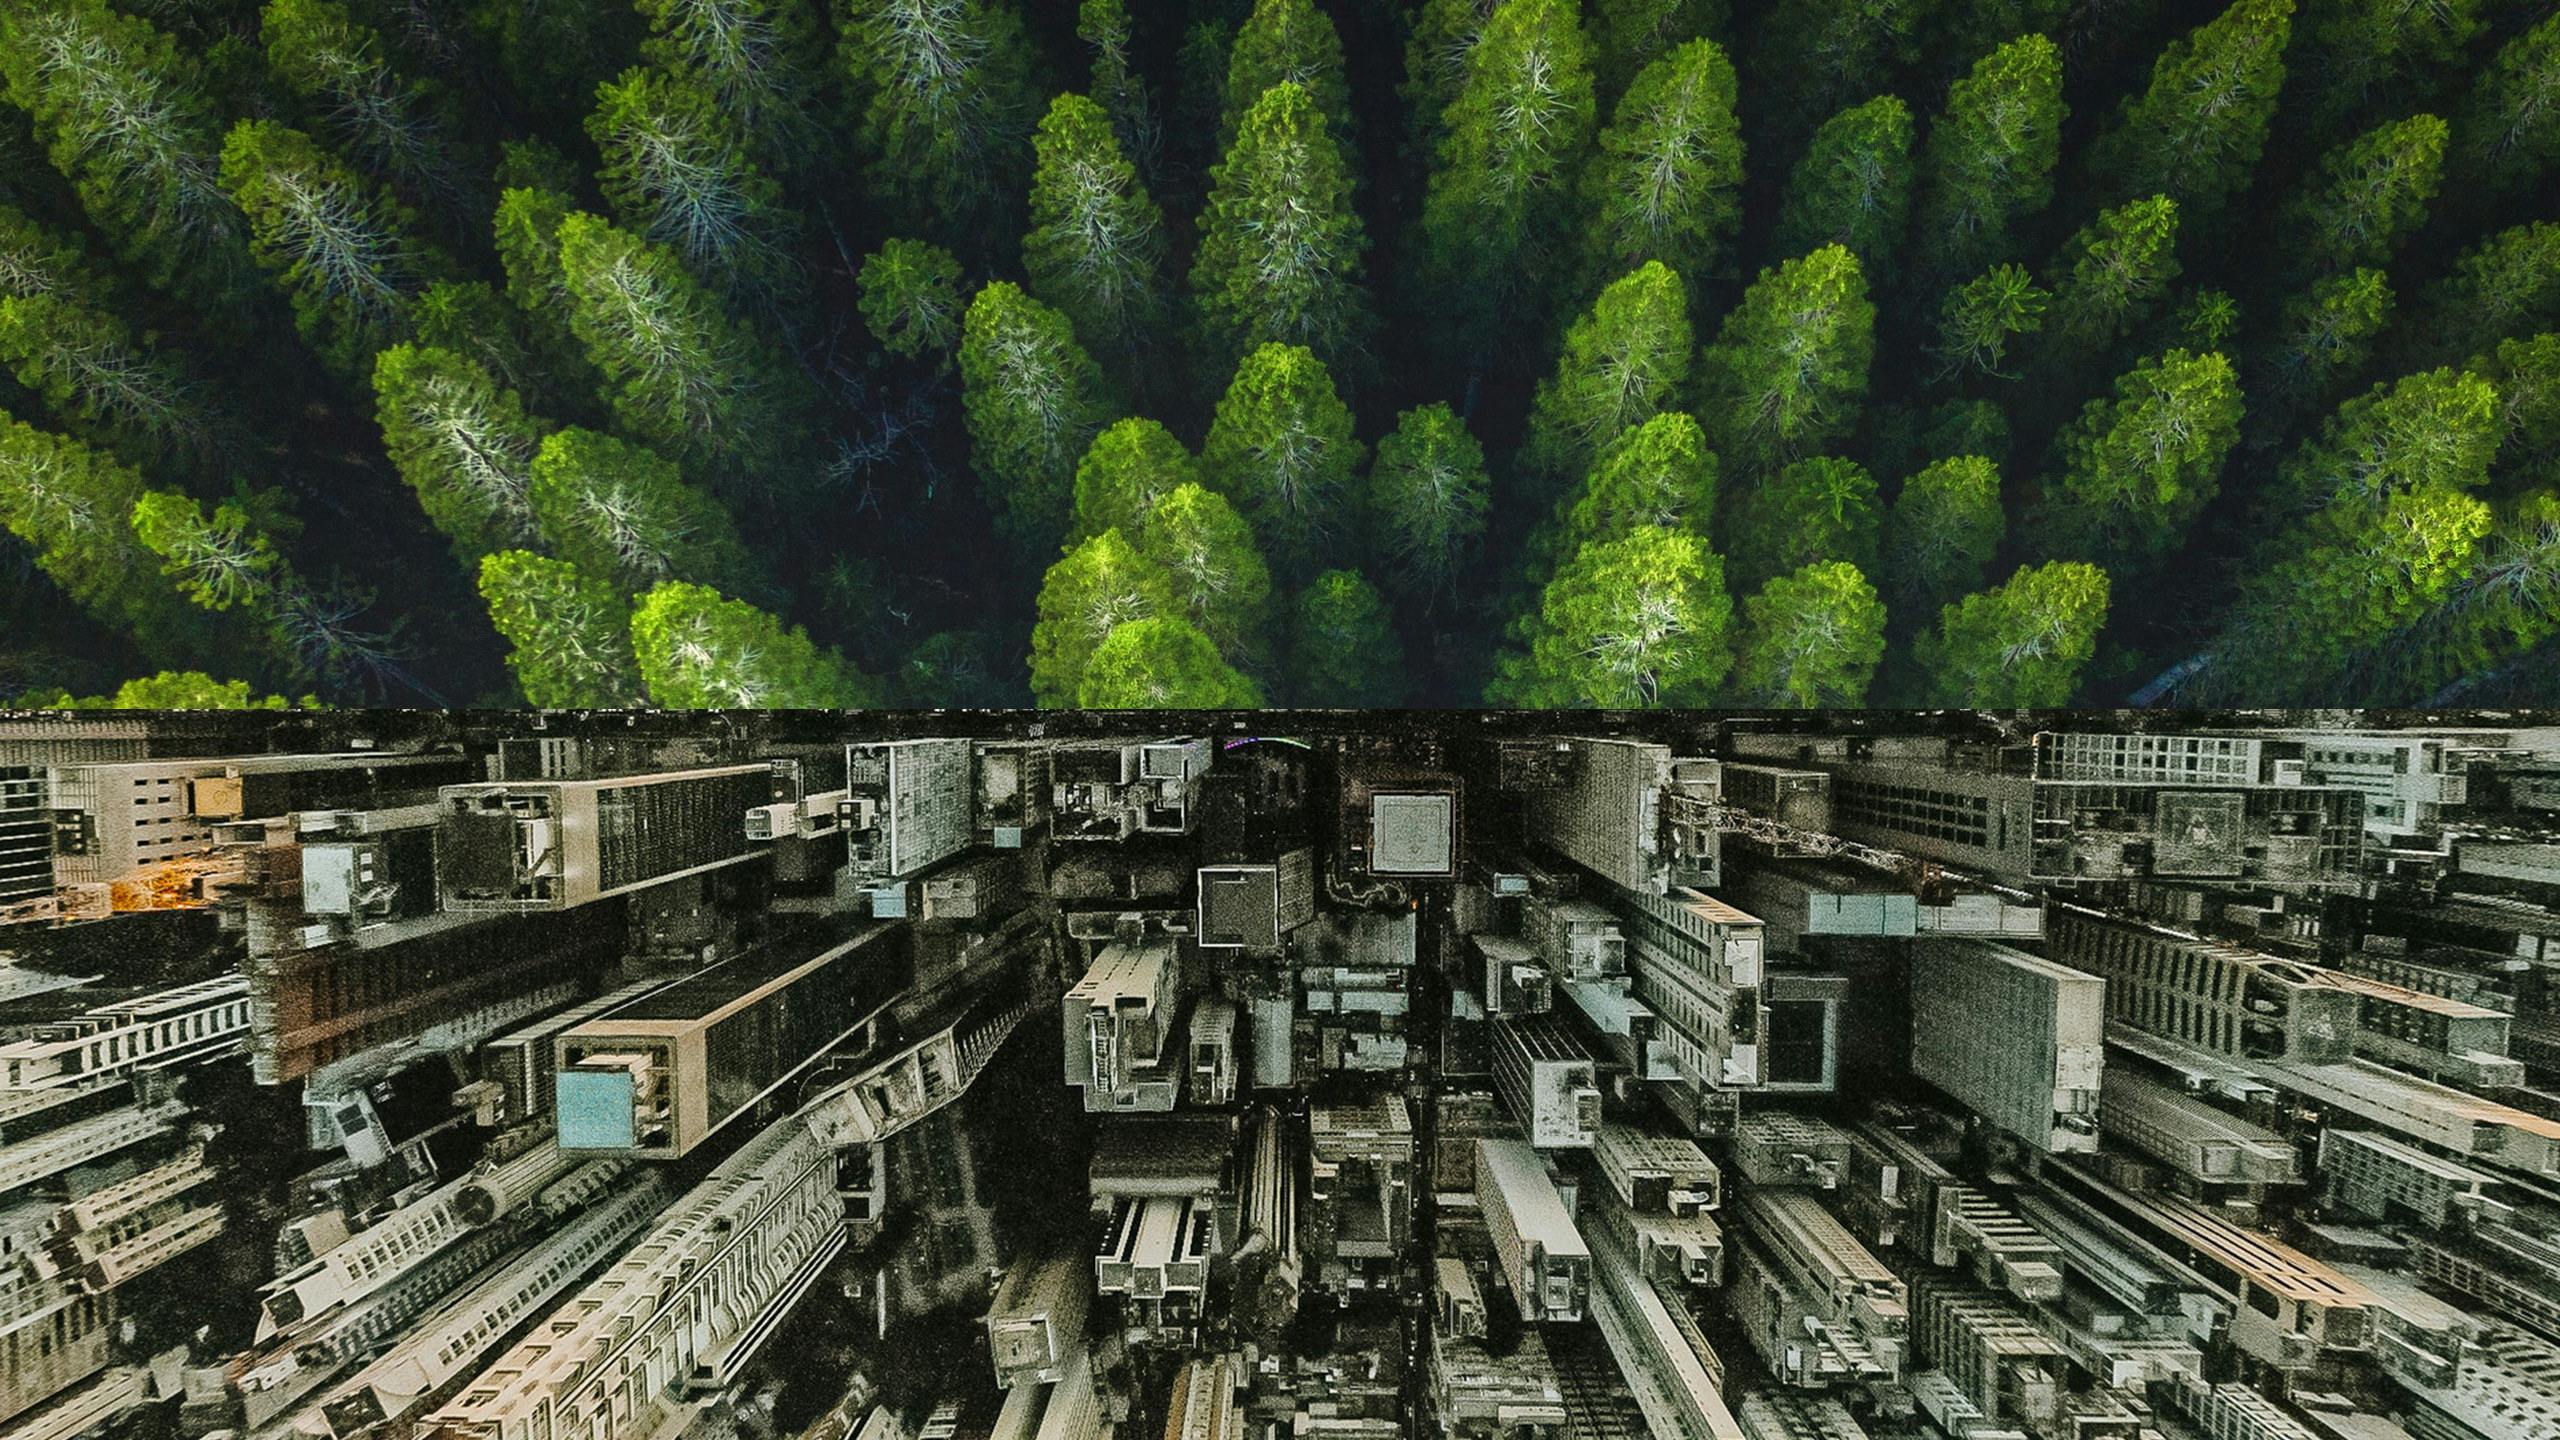 City Landscape Next To Forest - Consumer Product Design & Development